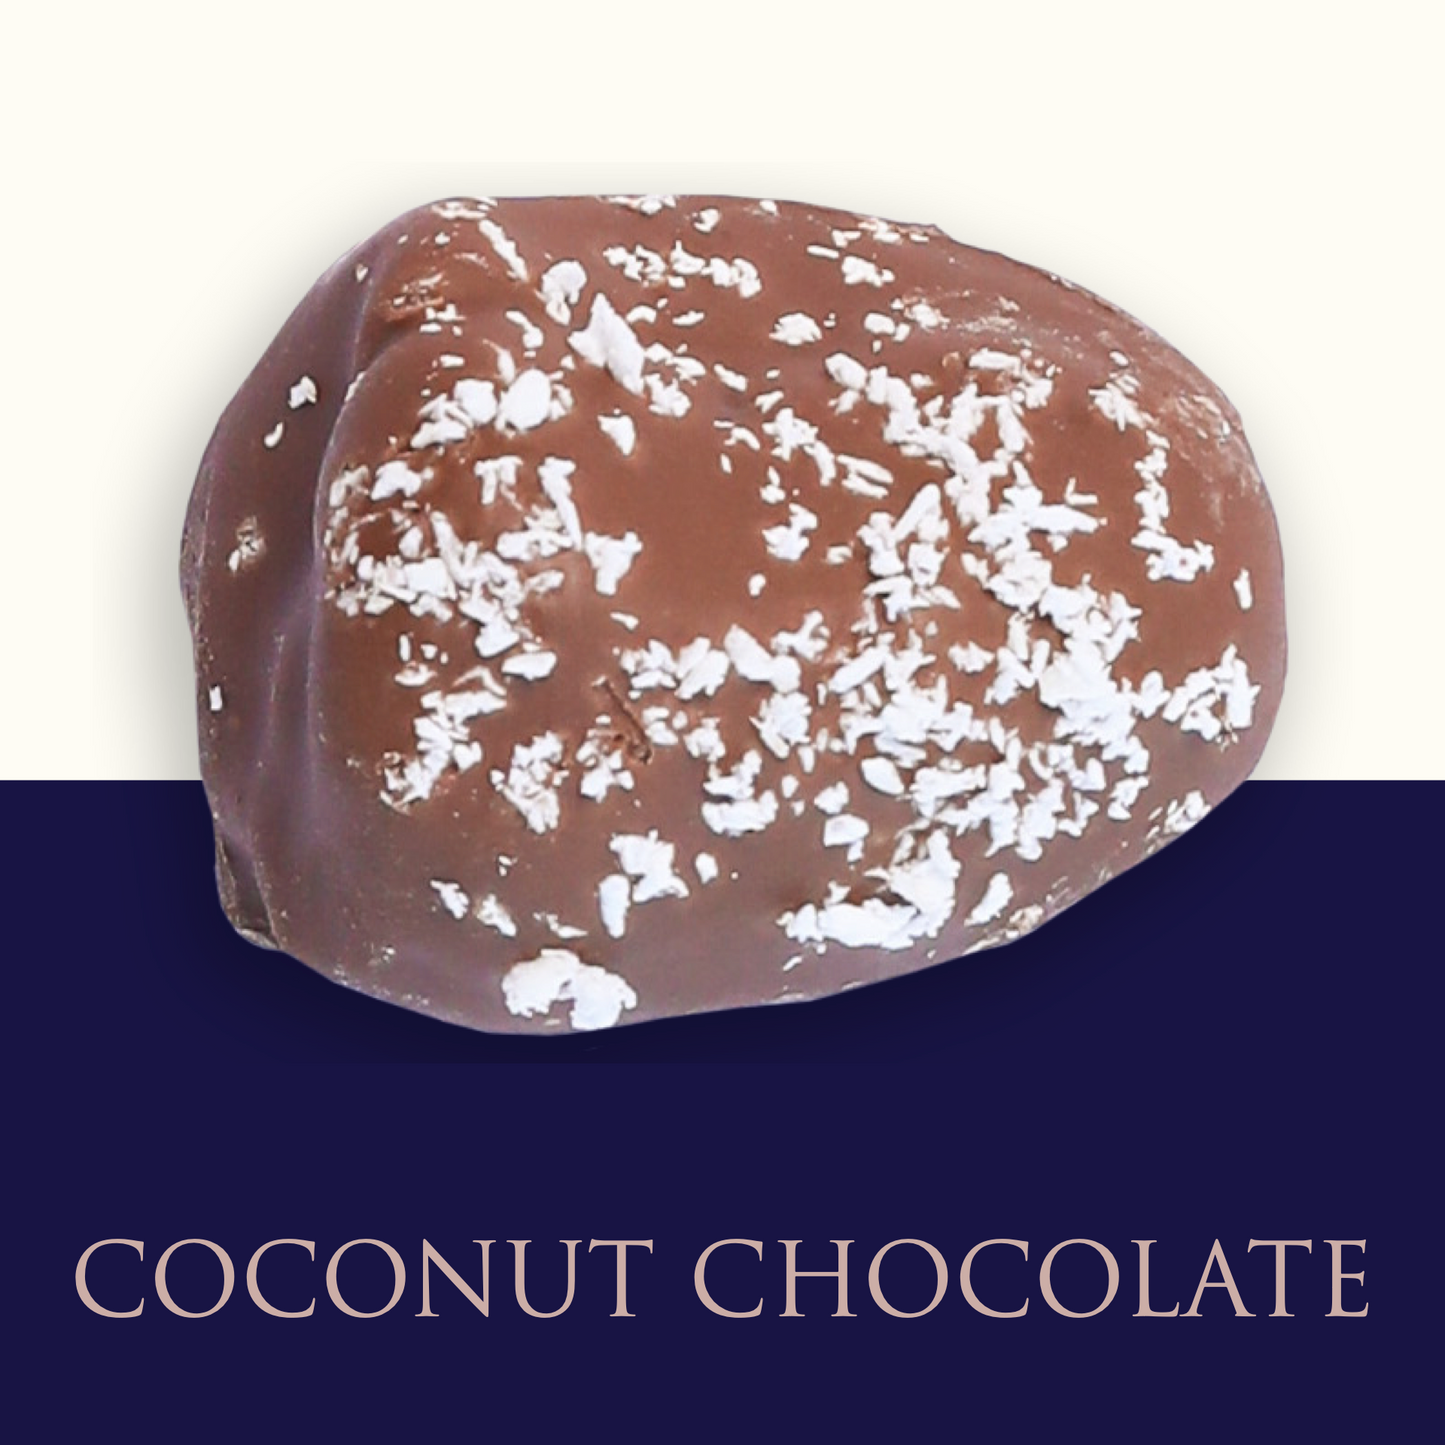 Sukkary coconut chocolate